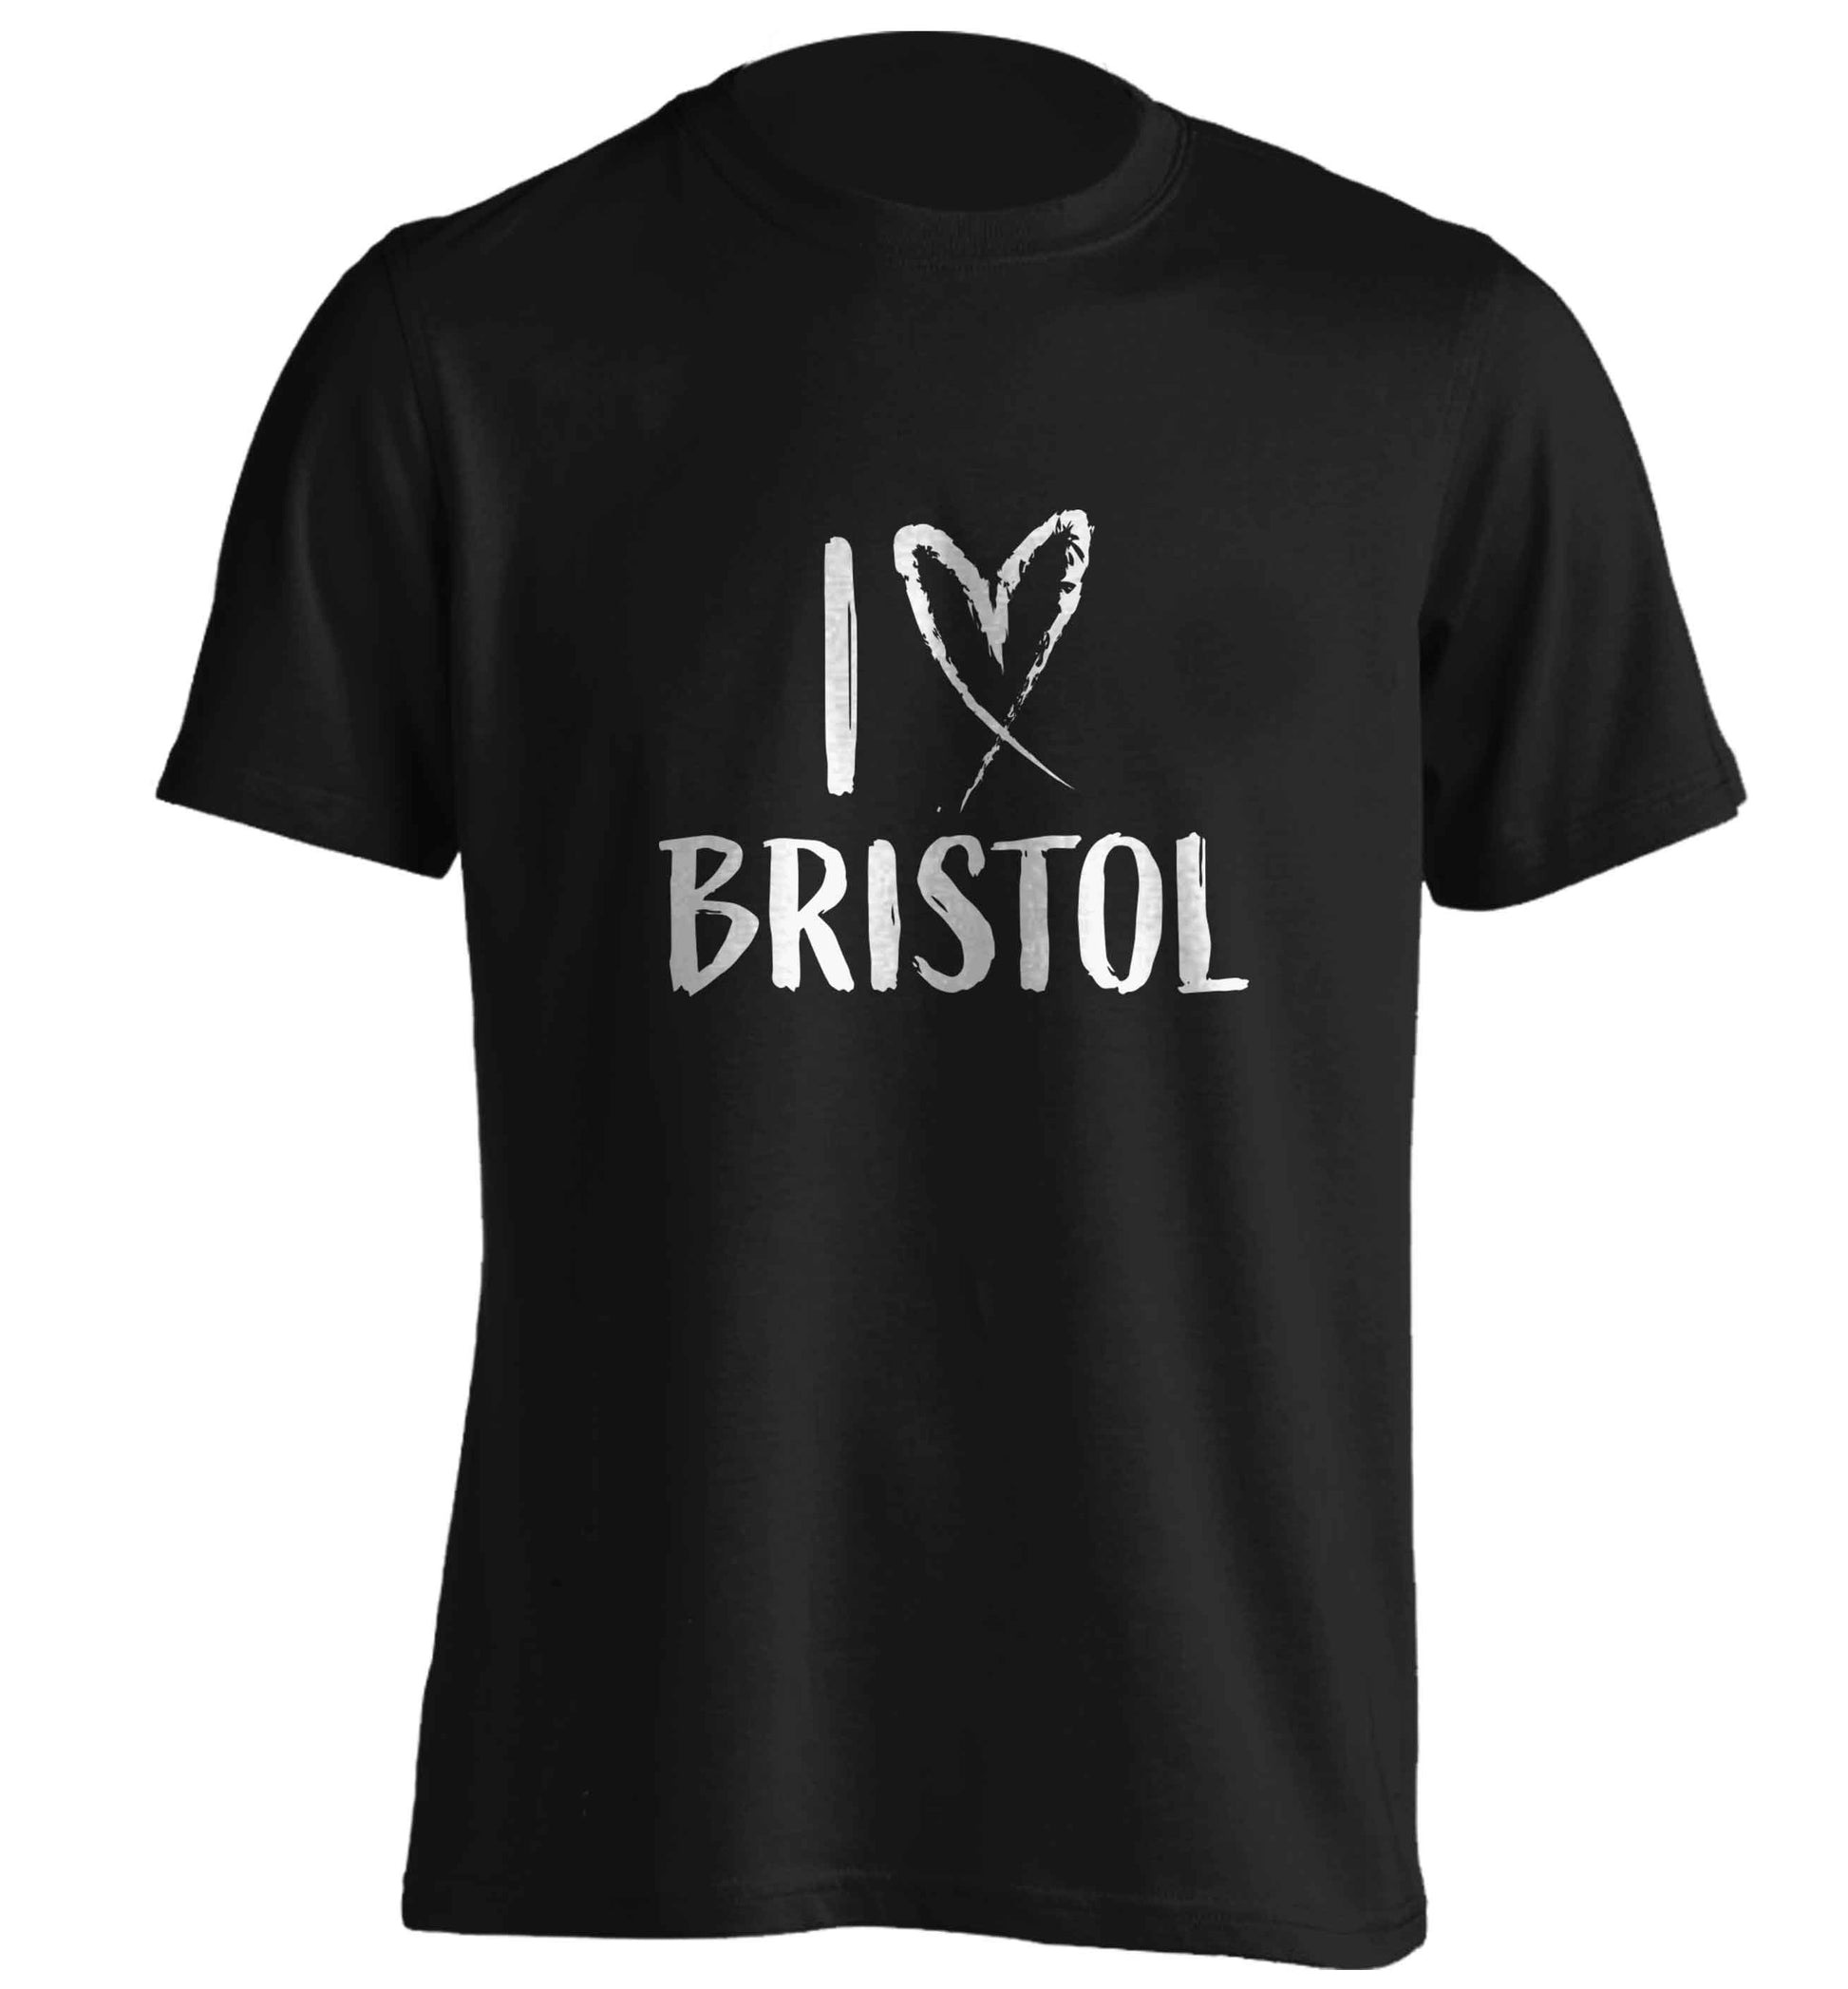 I love Bristol adults unisex black Tshirt 2XL